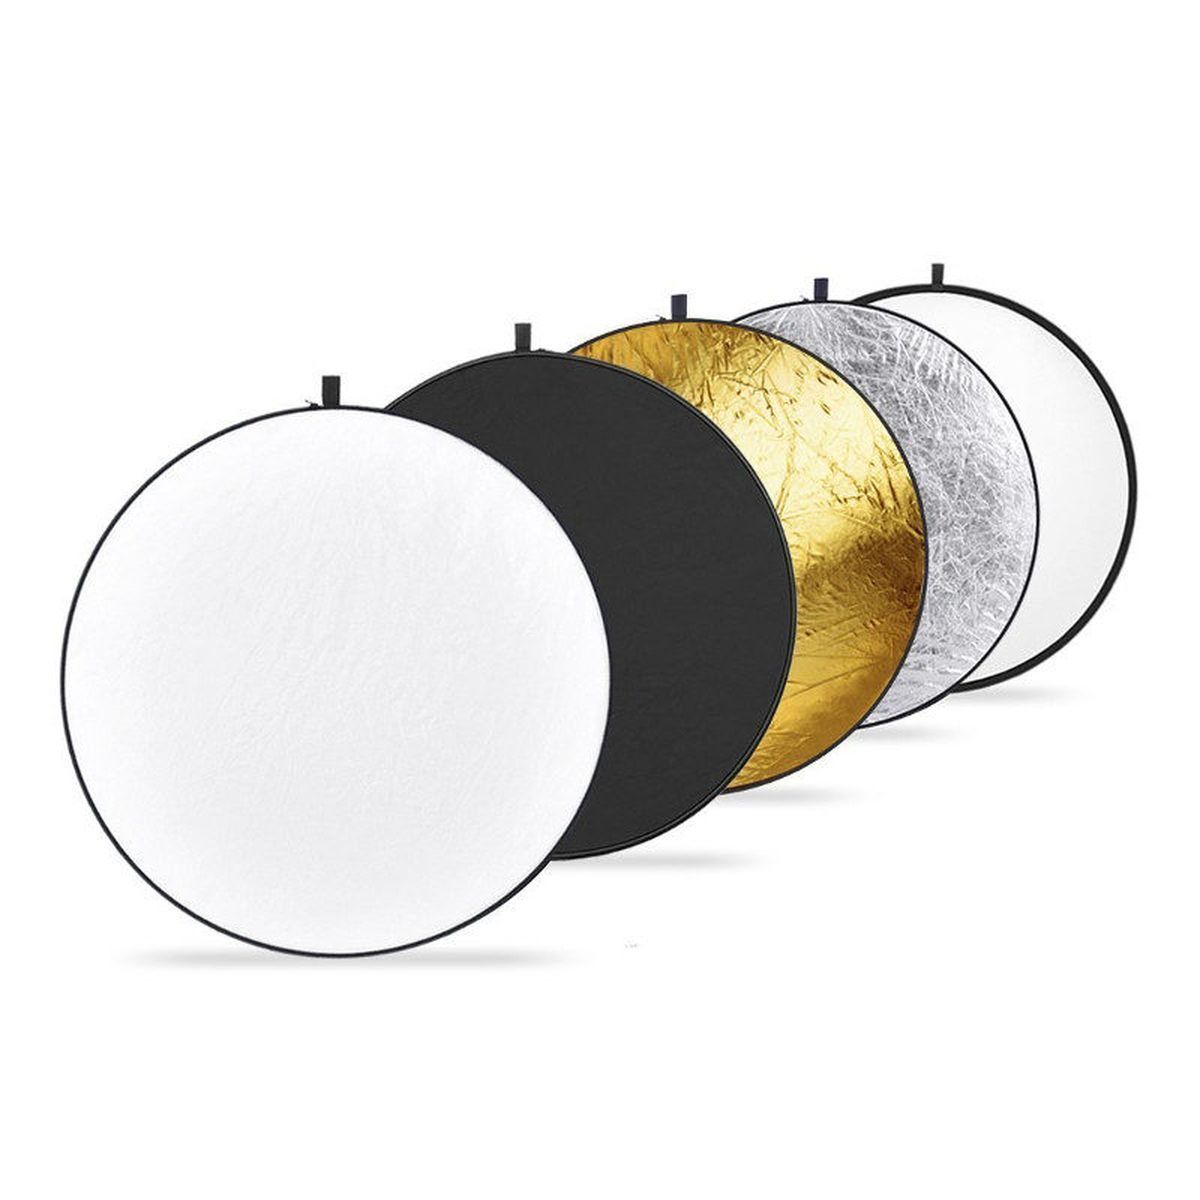 Caruba Reflektor 5-in-1 Gold, Silber, Schwarz, Weiß, Transparent - 56 cm